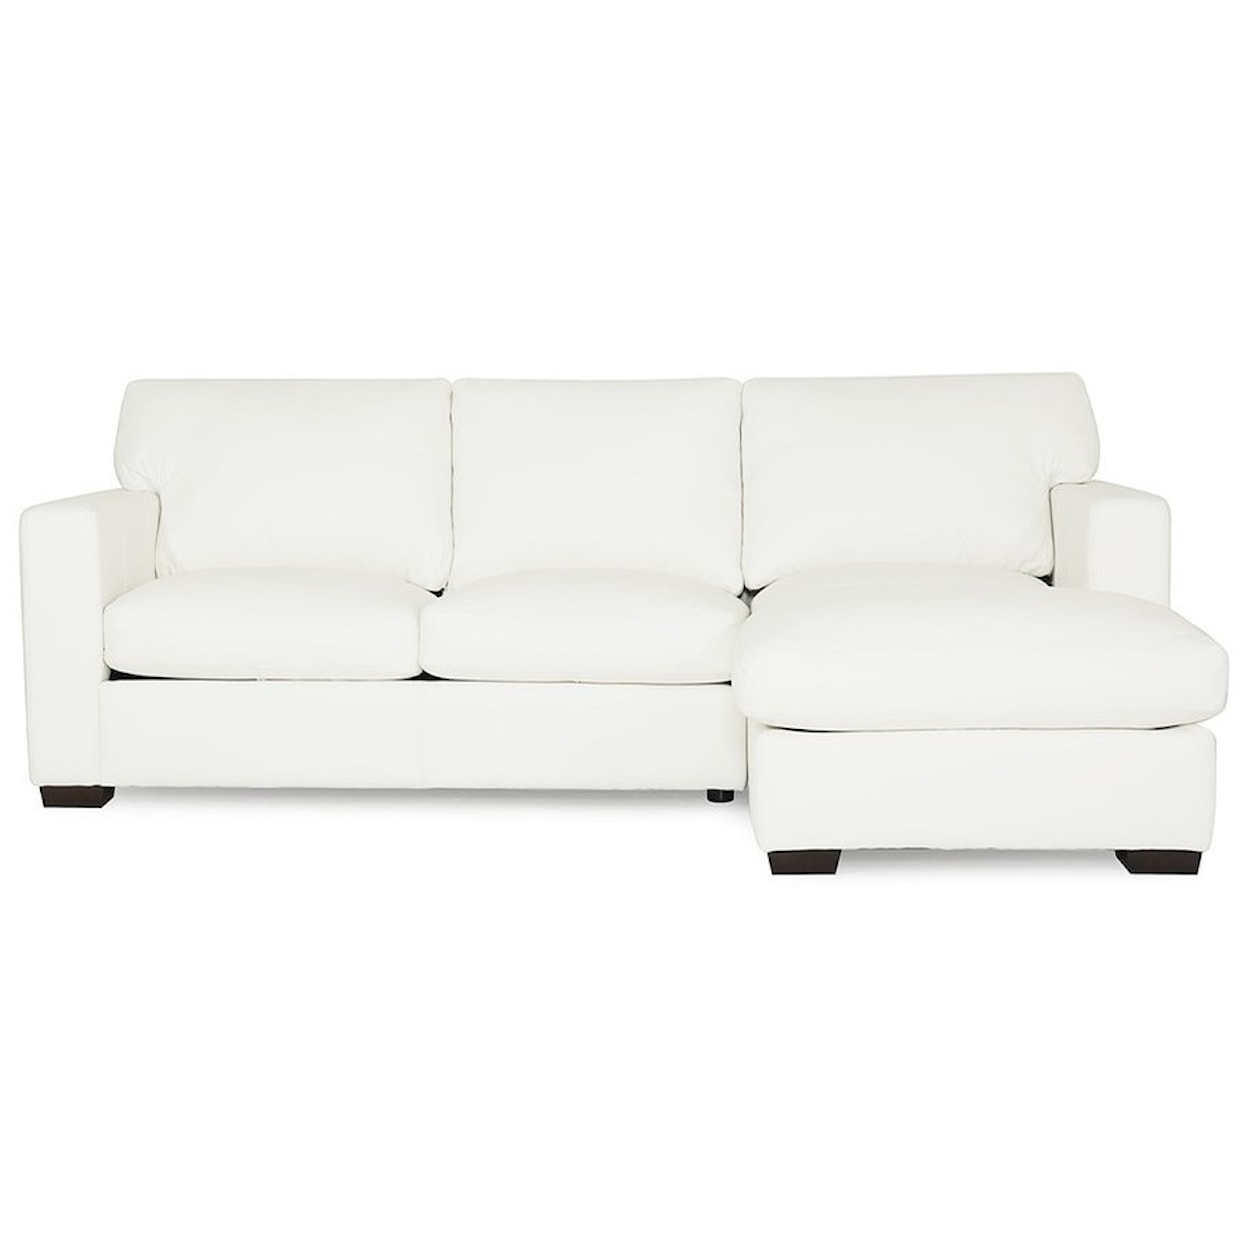 Palliser Colebrook Sectional Sofa